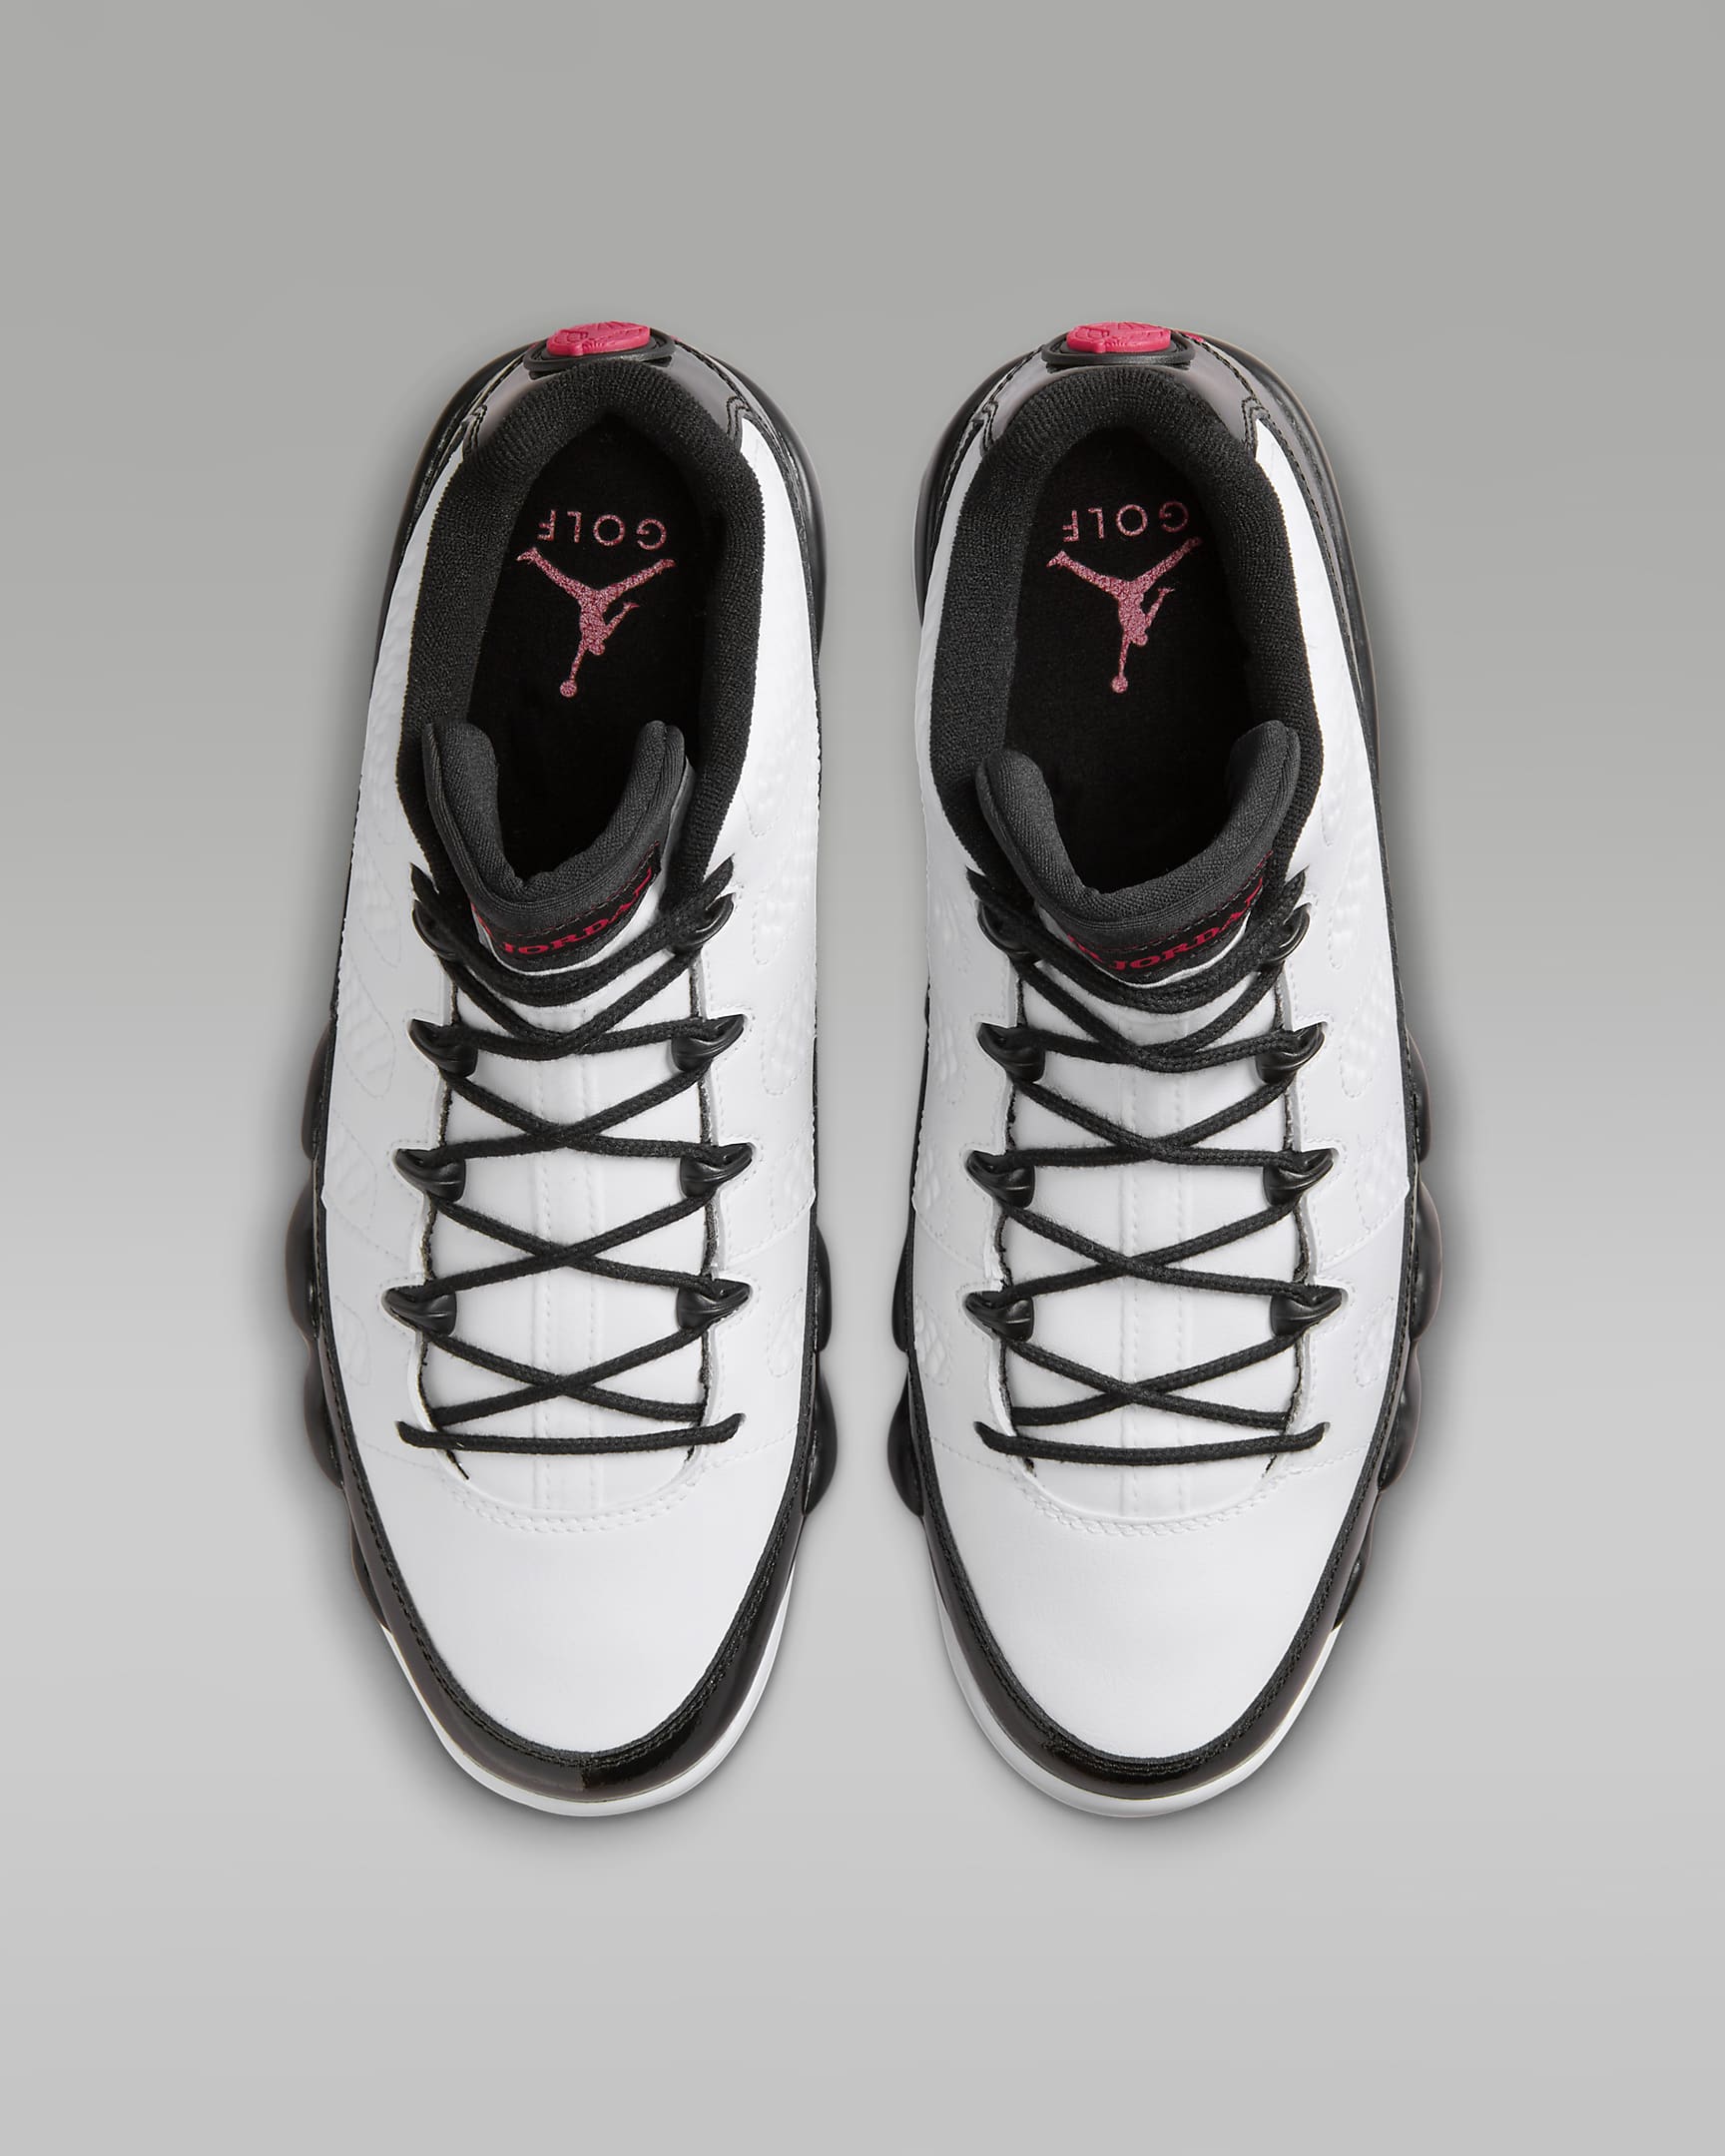 Air Jordan 9 G Golf Shoes - White/Black/True Red